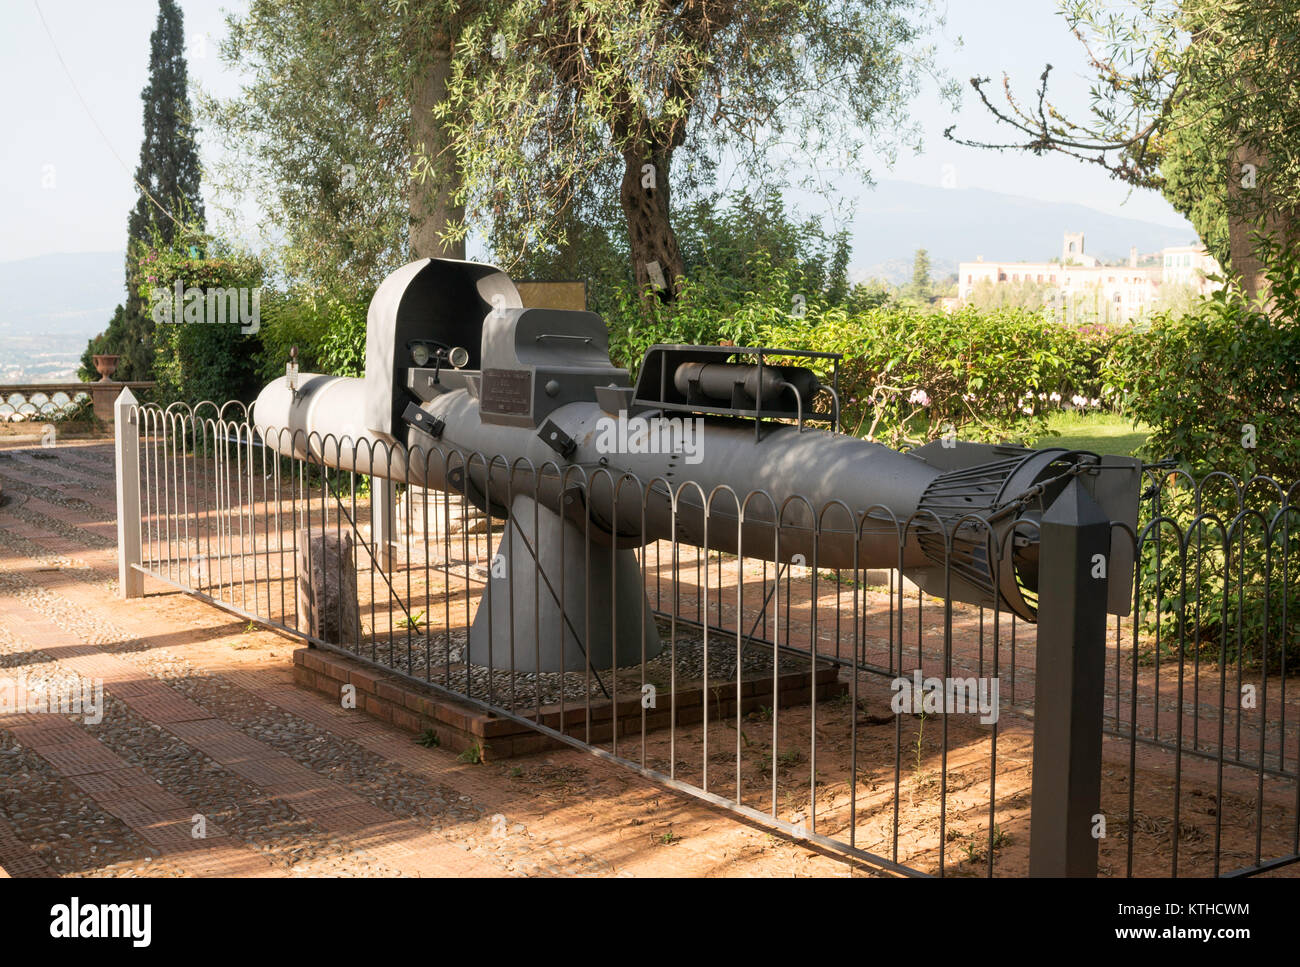 Mini submarine war memorial within the public gardens in Taormina, Sicily, Europe Stock Photo